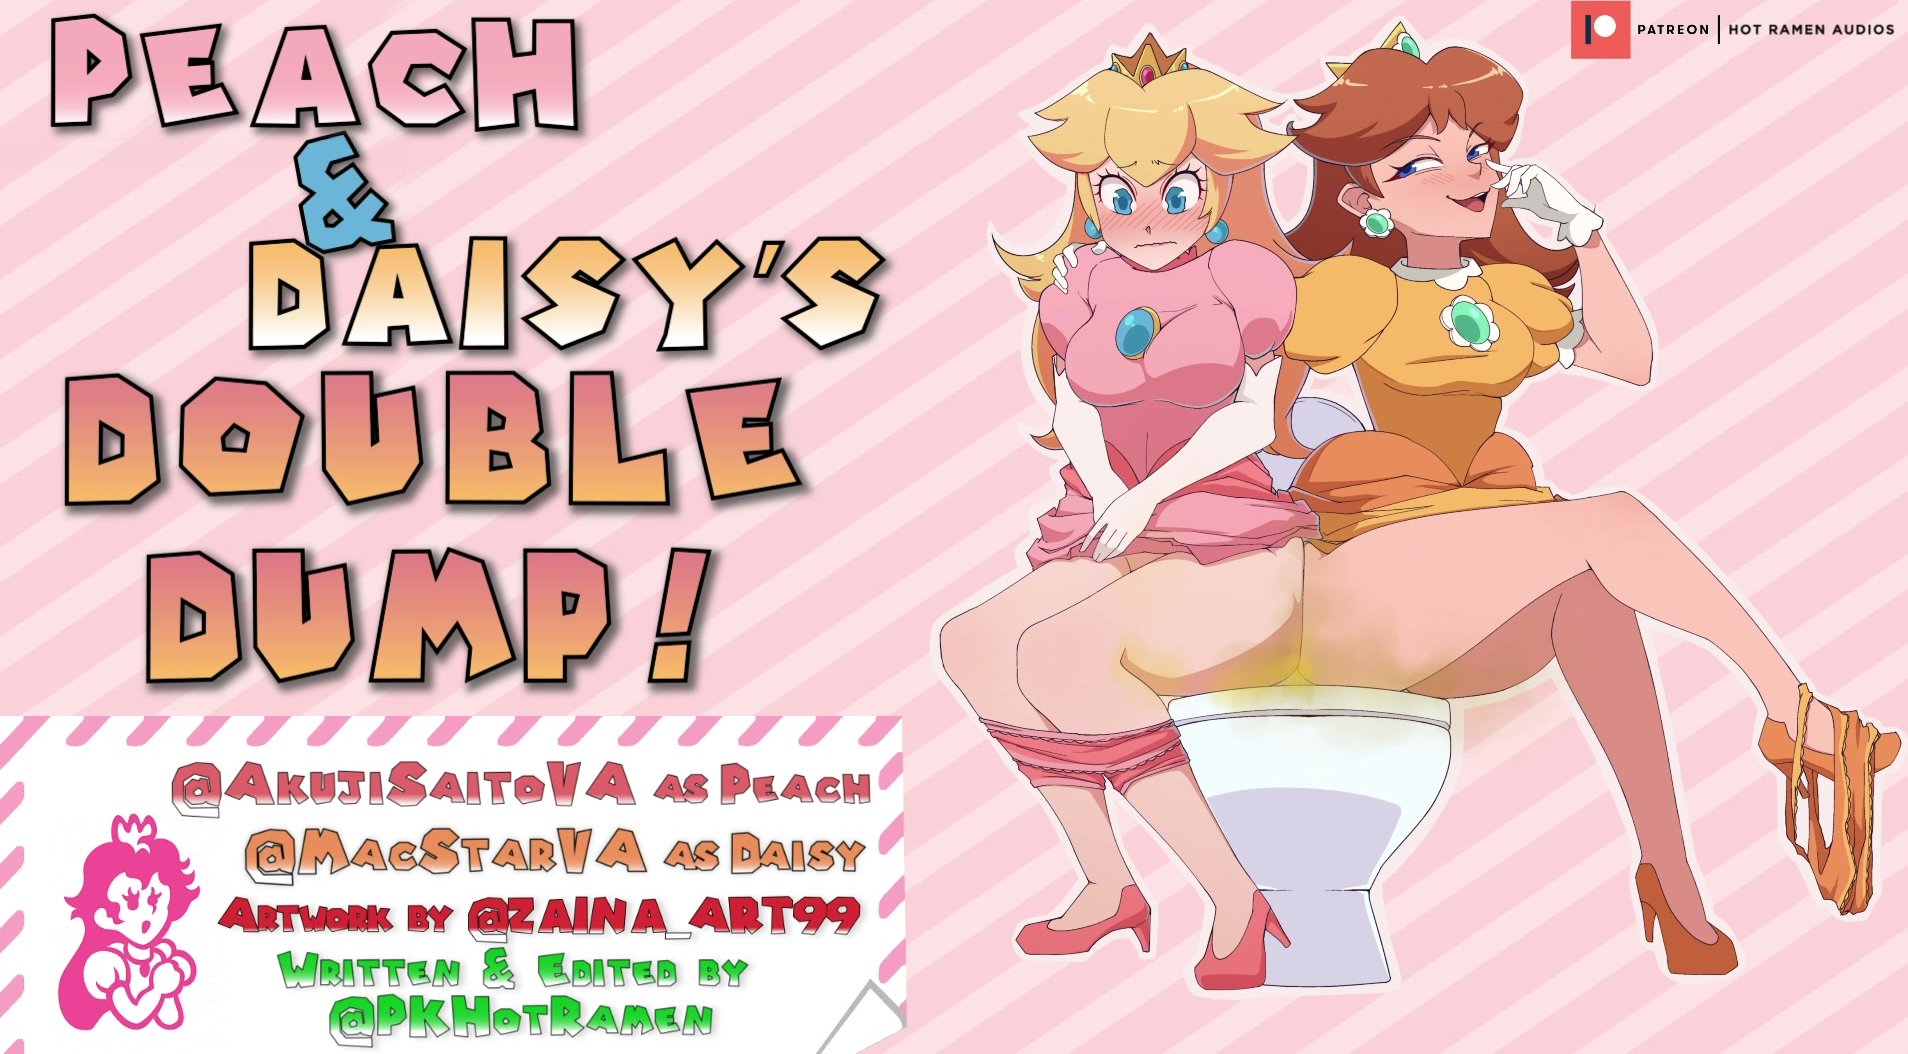 Peach and Daisys Double Dump! (PKHotRamen)